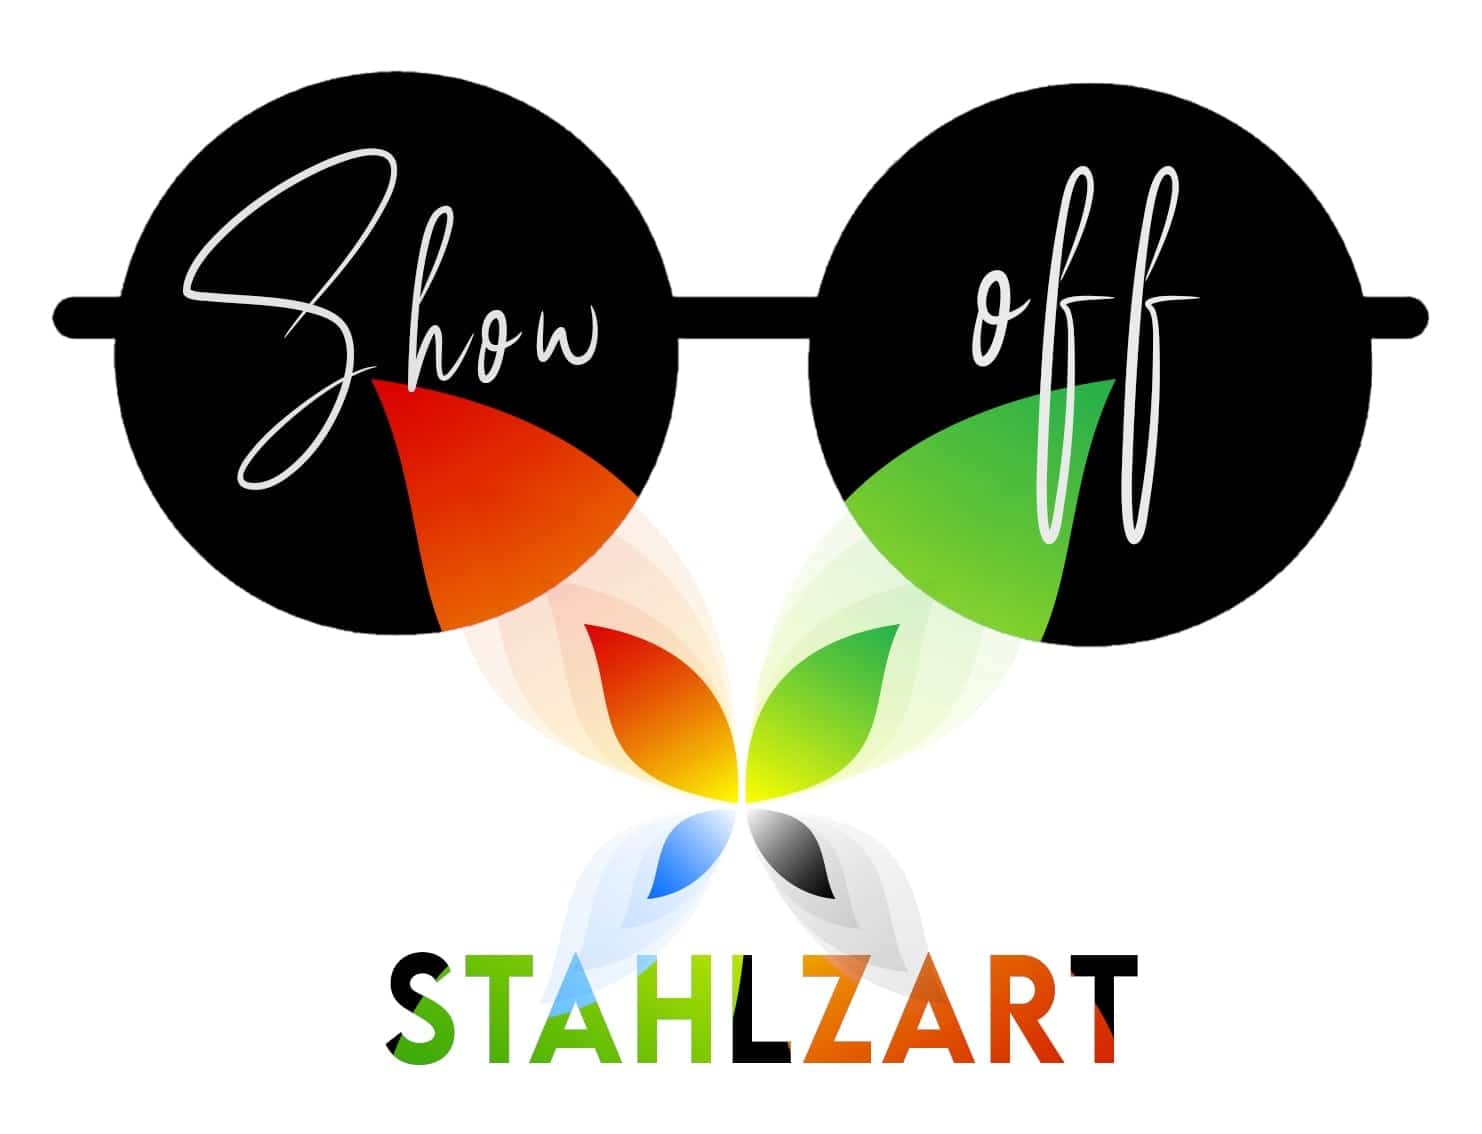 stahlzart-show-off-logo-kunden-referenzen-moebel-nach-mass-bilder-fotos-custom-made-furniture-handmade-with-love-in-germany